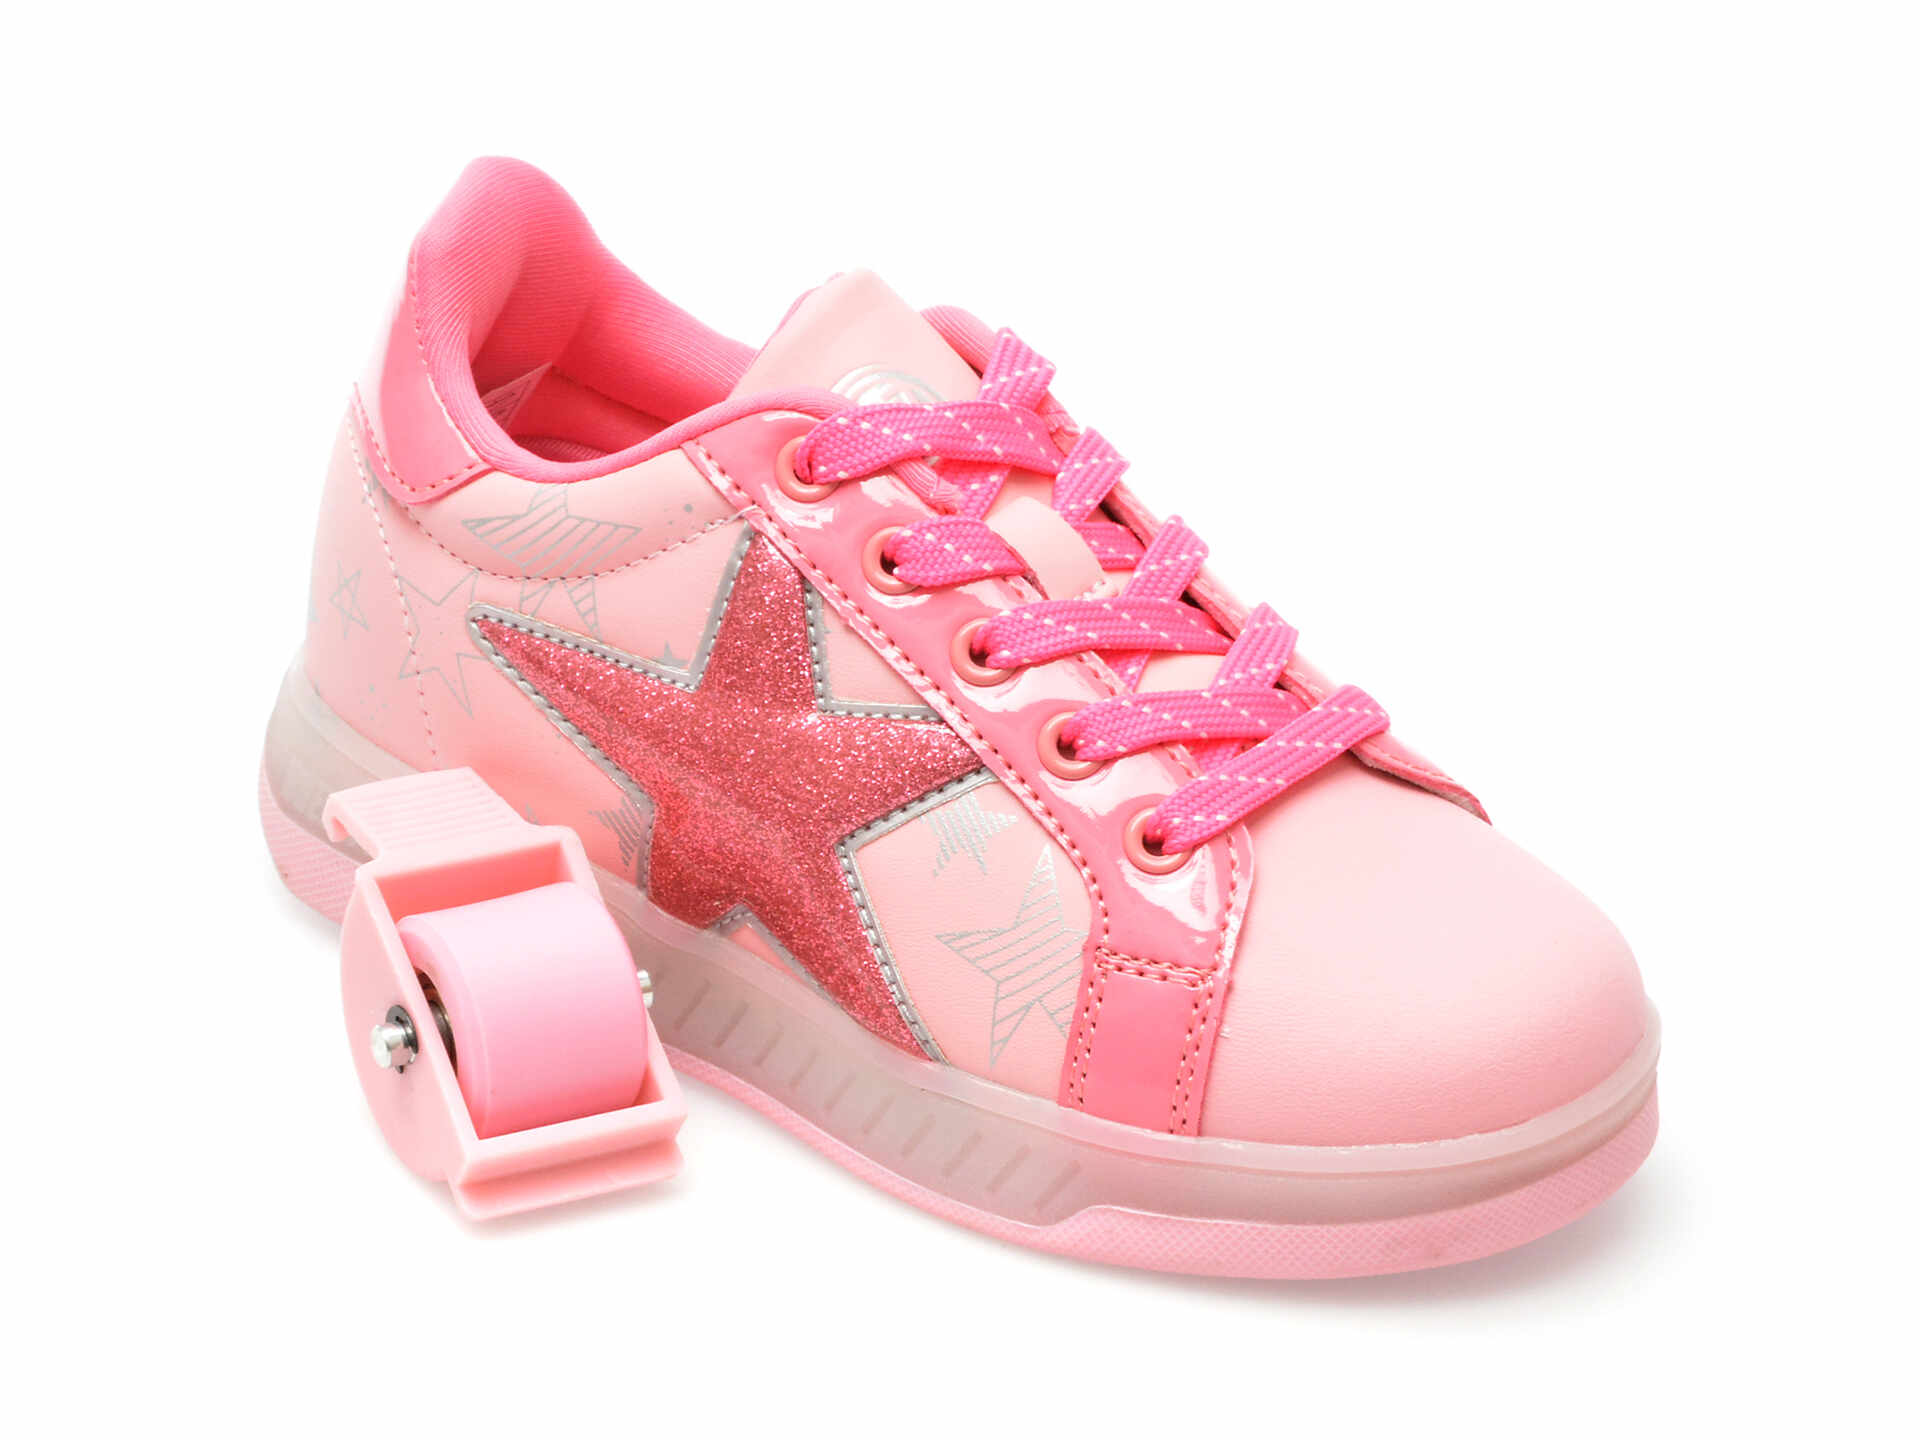 Pantofi BREEZY ROLLERS roz, 2195680, din piele naturala